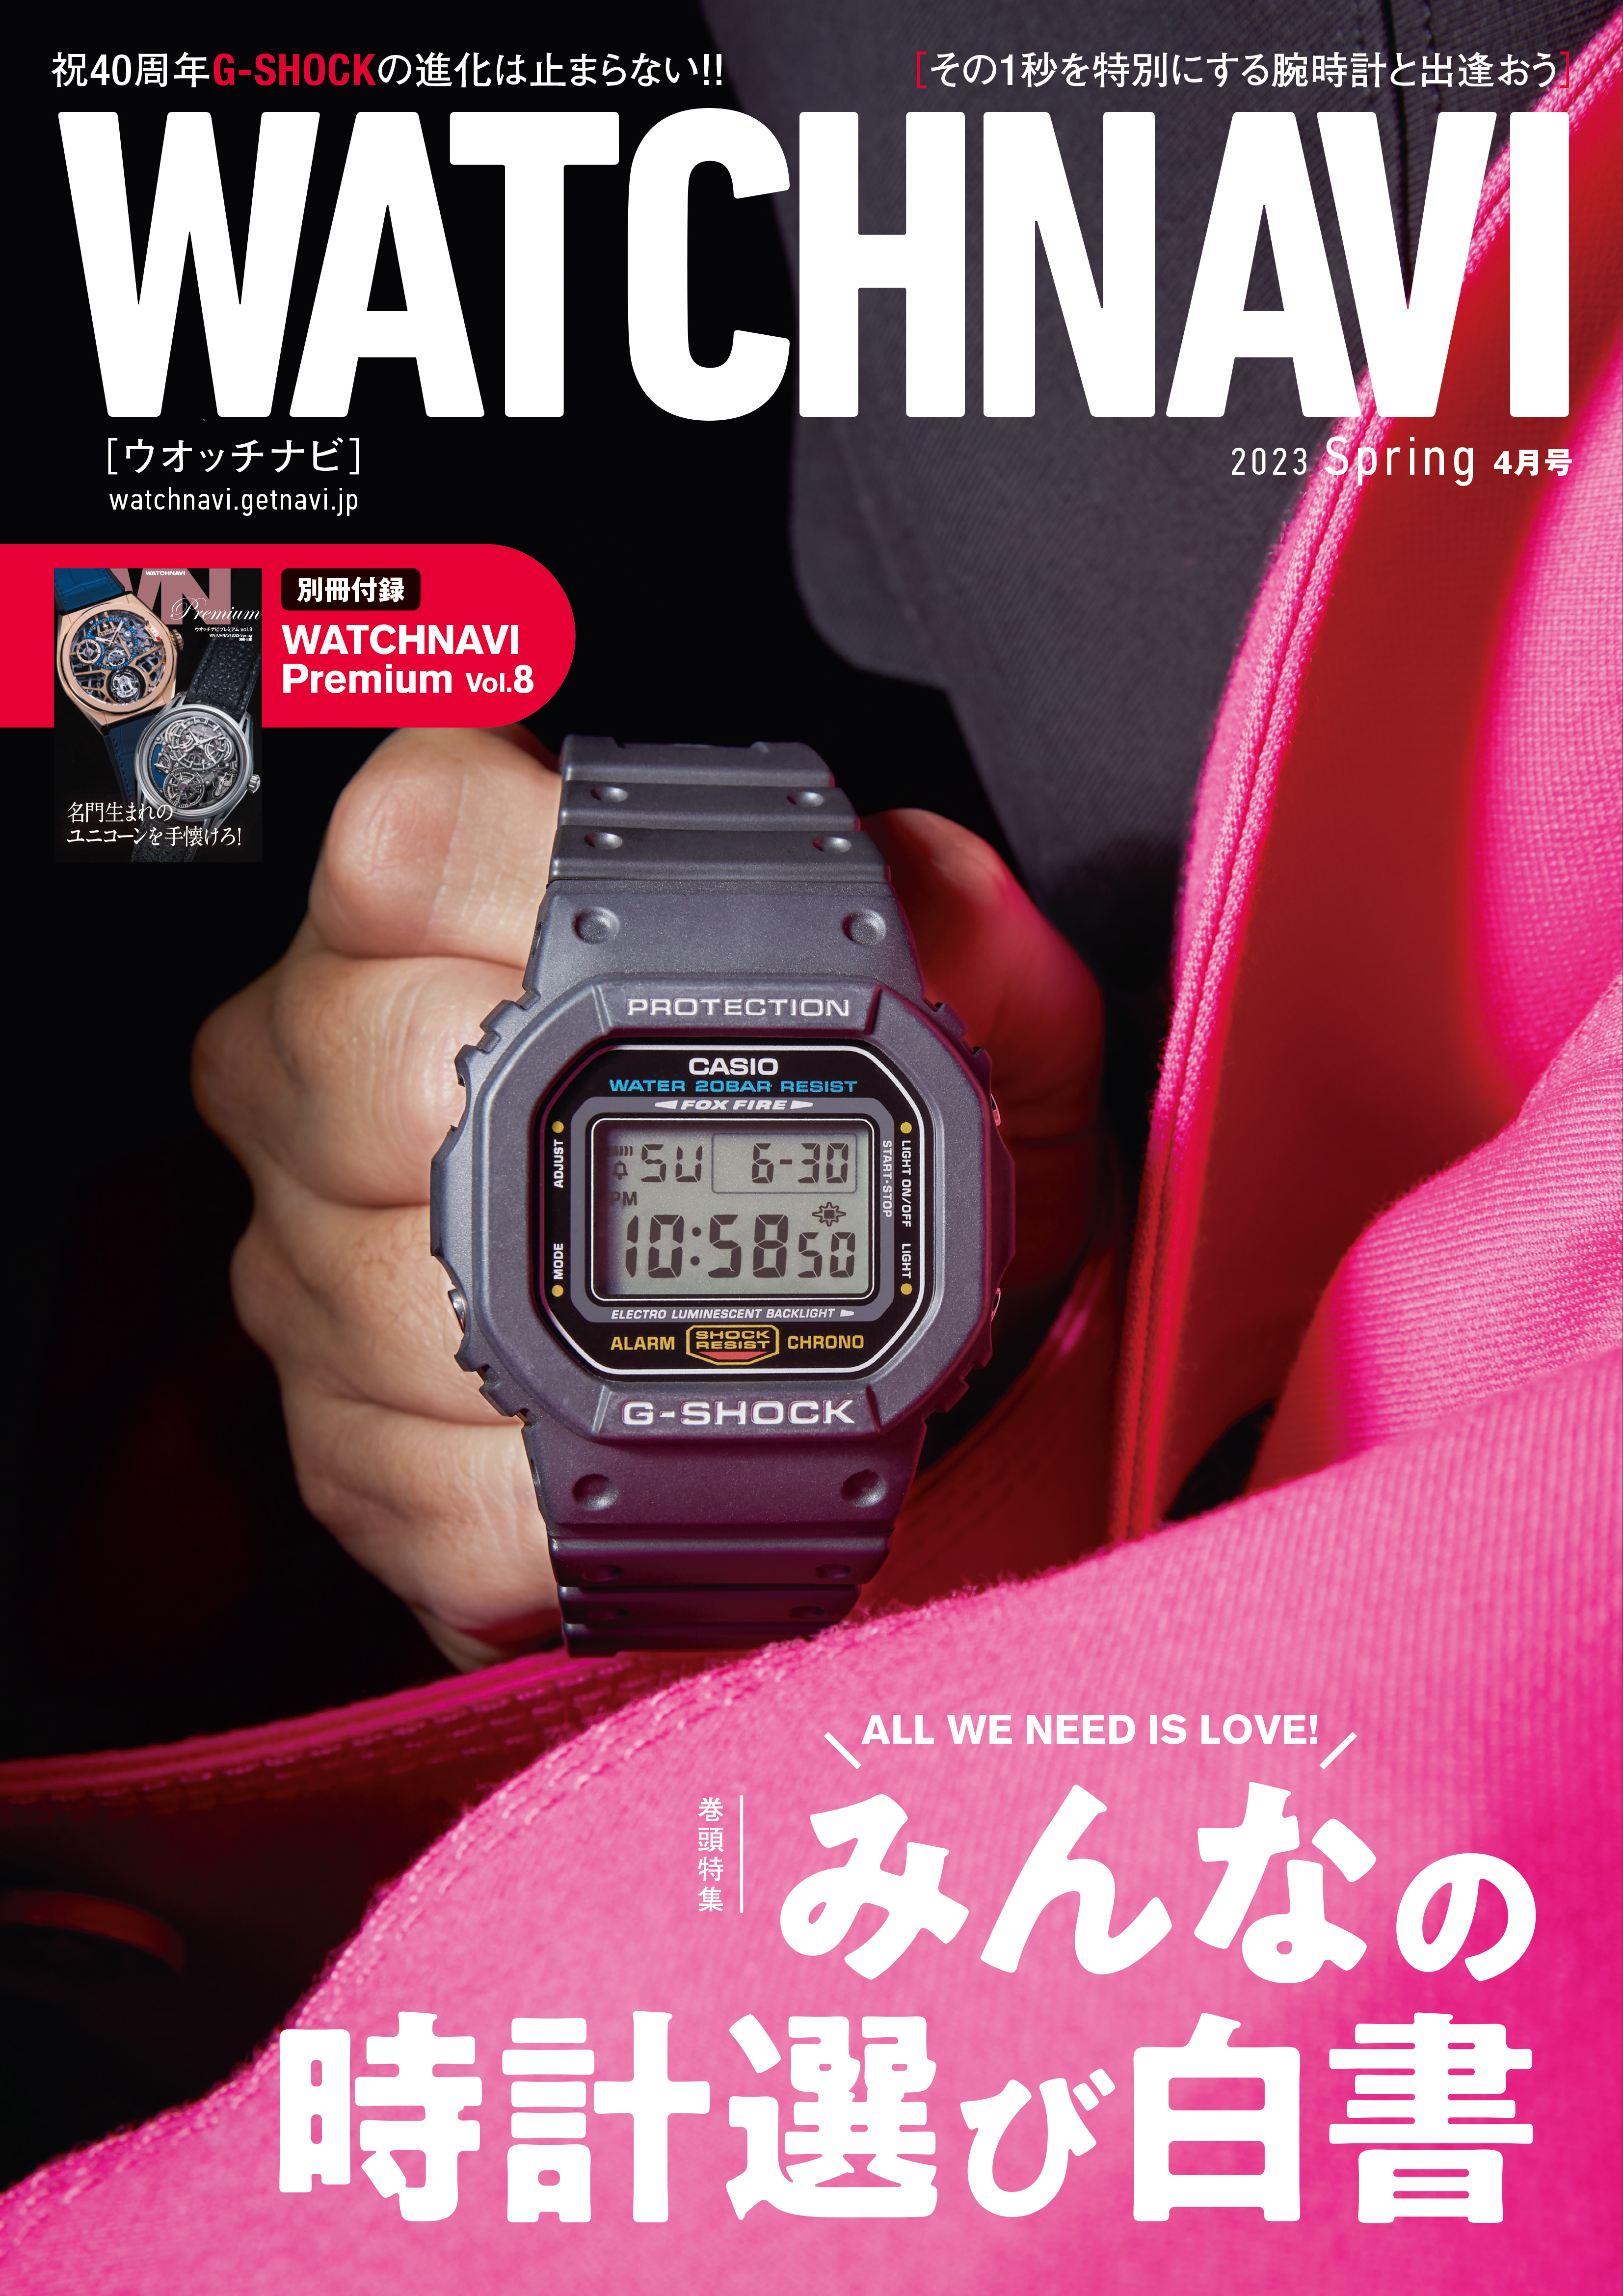 WATCH NAVI4月号2023Spring - WATCH NAVI編集部 - 雑誌・無料試し読み ...